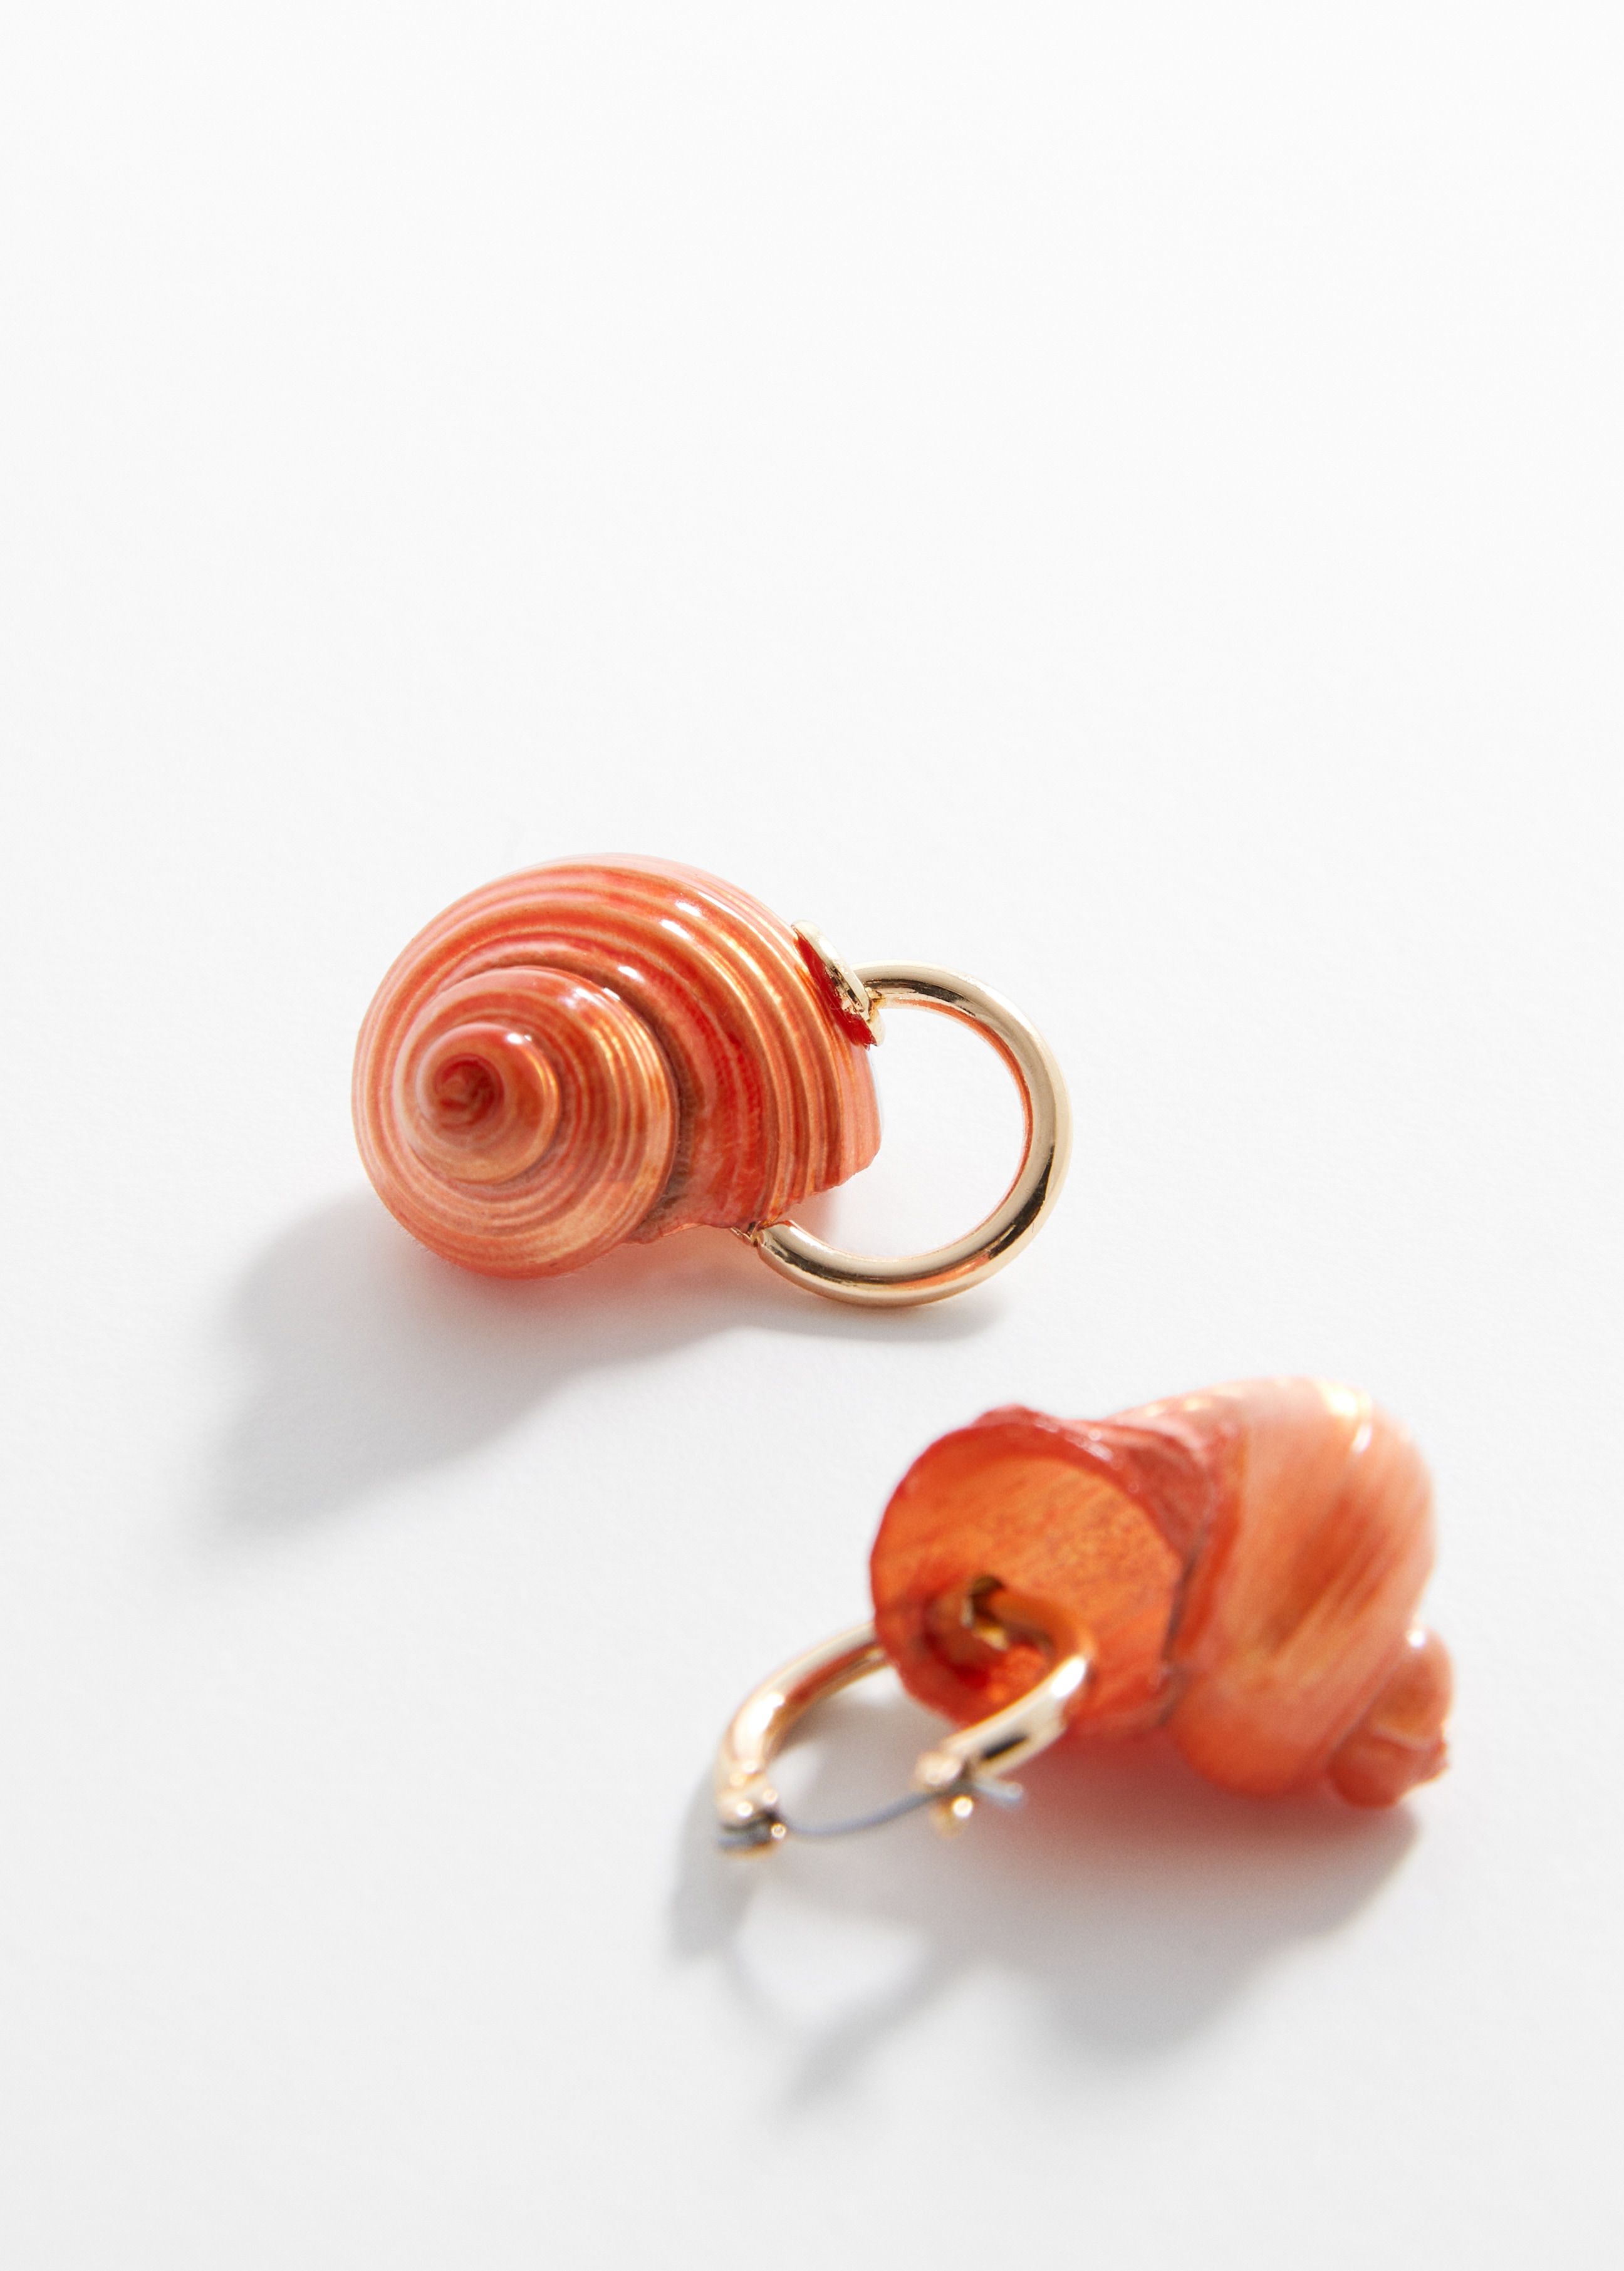 Shell earrings - Medium plane